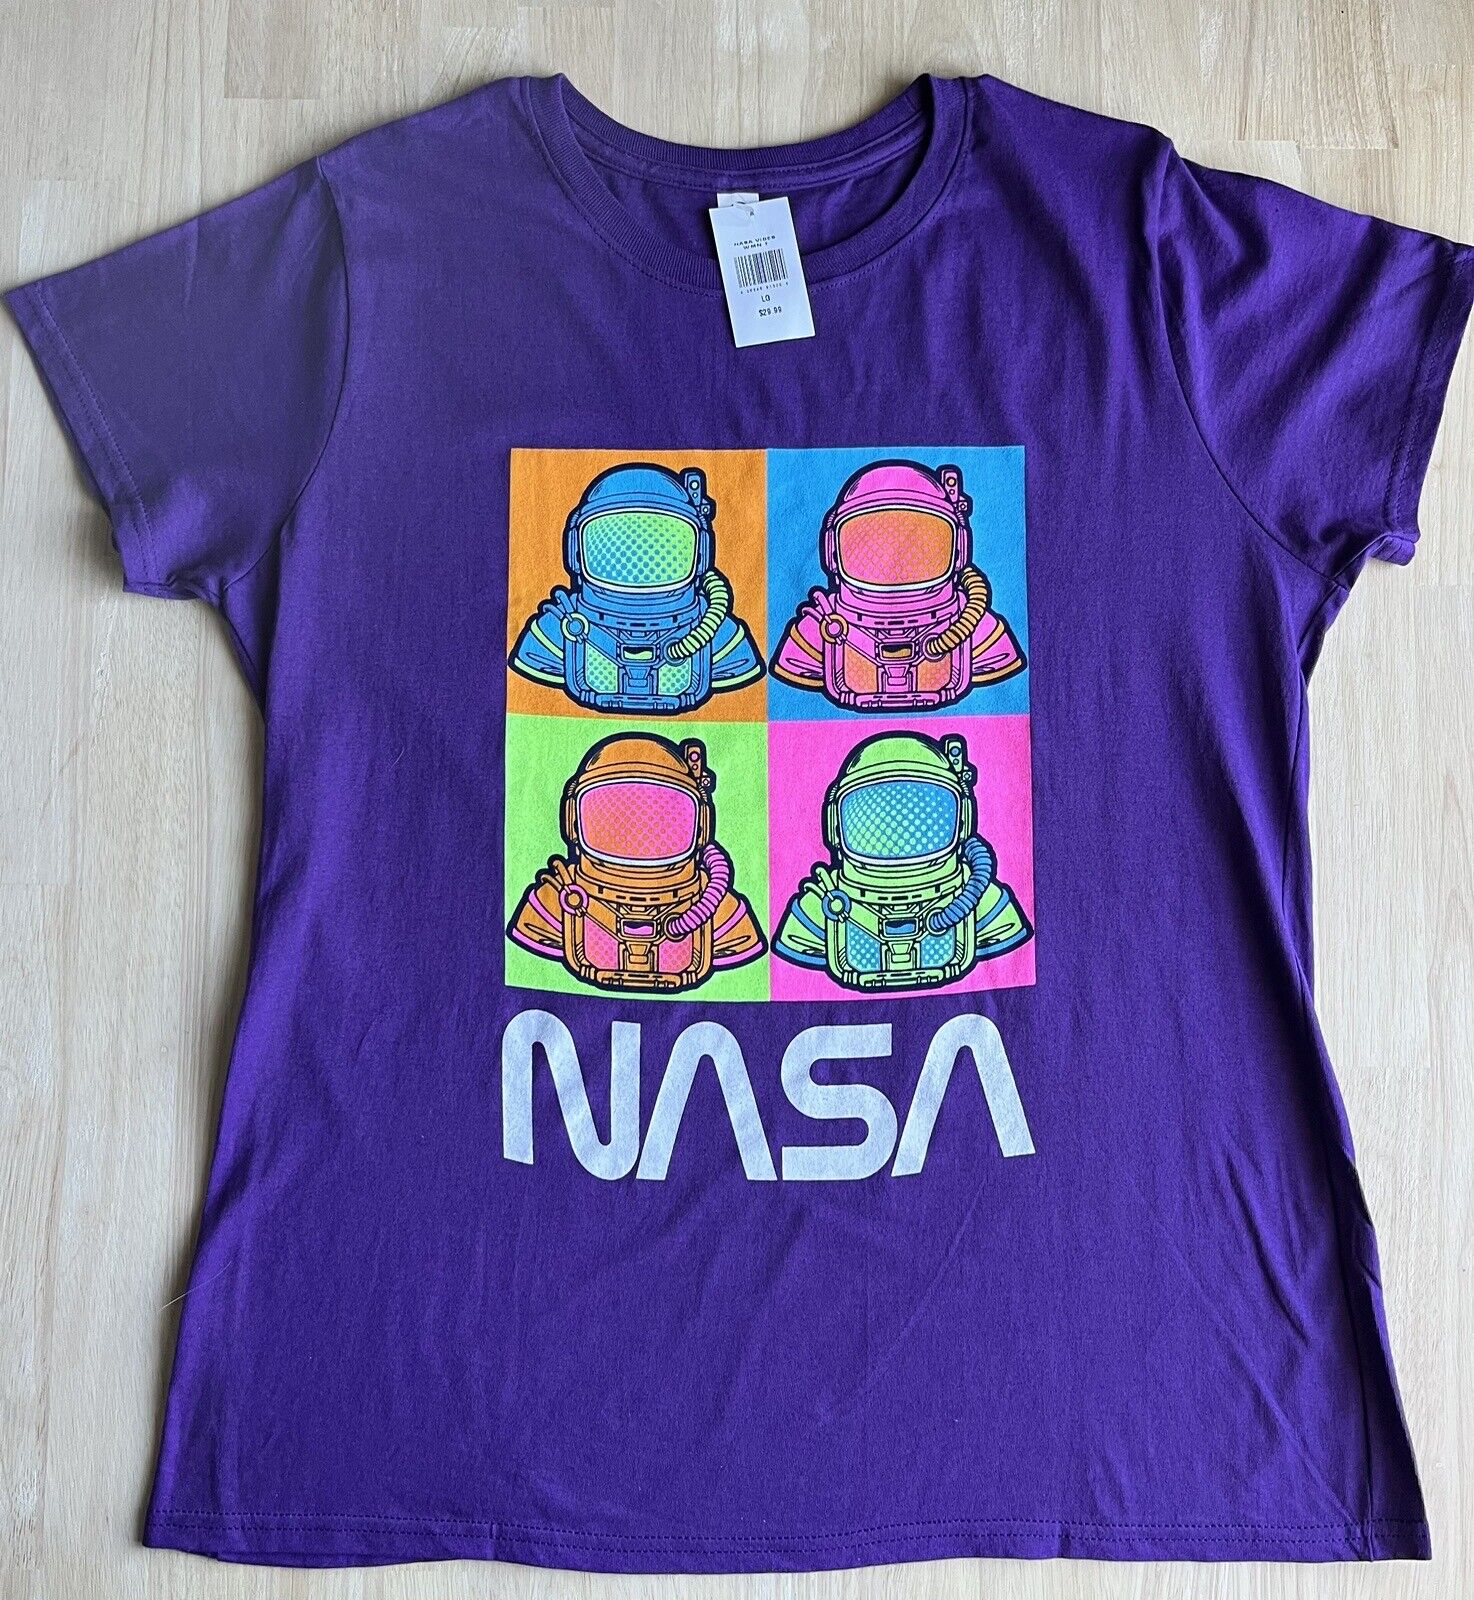 (LG) NASA Vibes Astronaut Shirt WARHOL Inspired Purple Neon Graphic Tee NWT